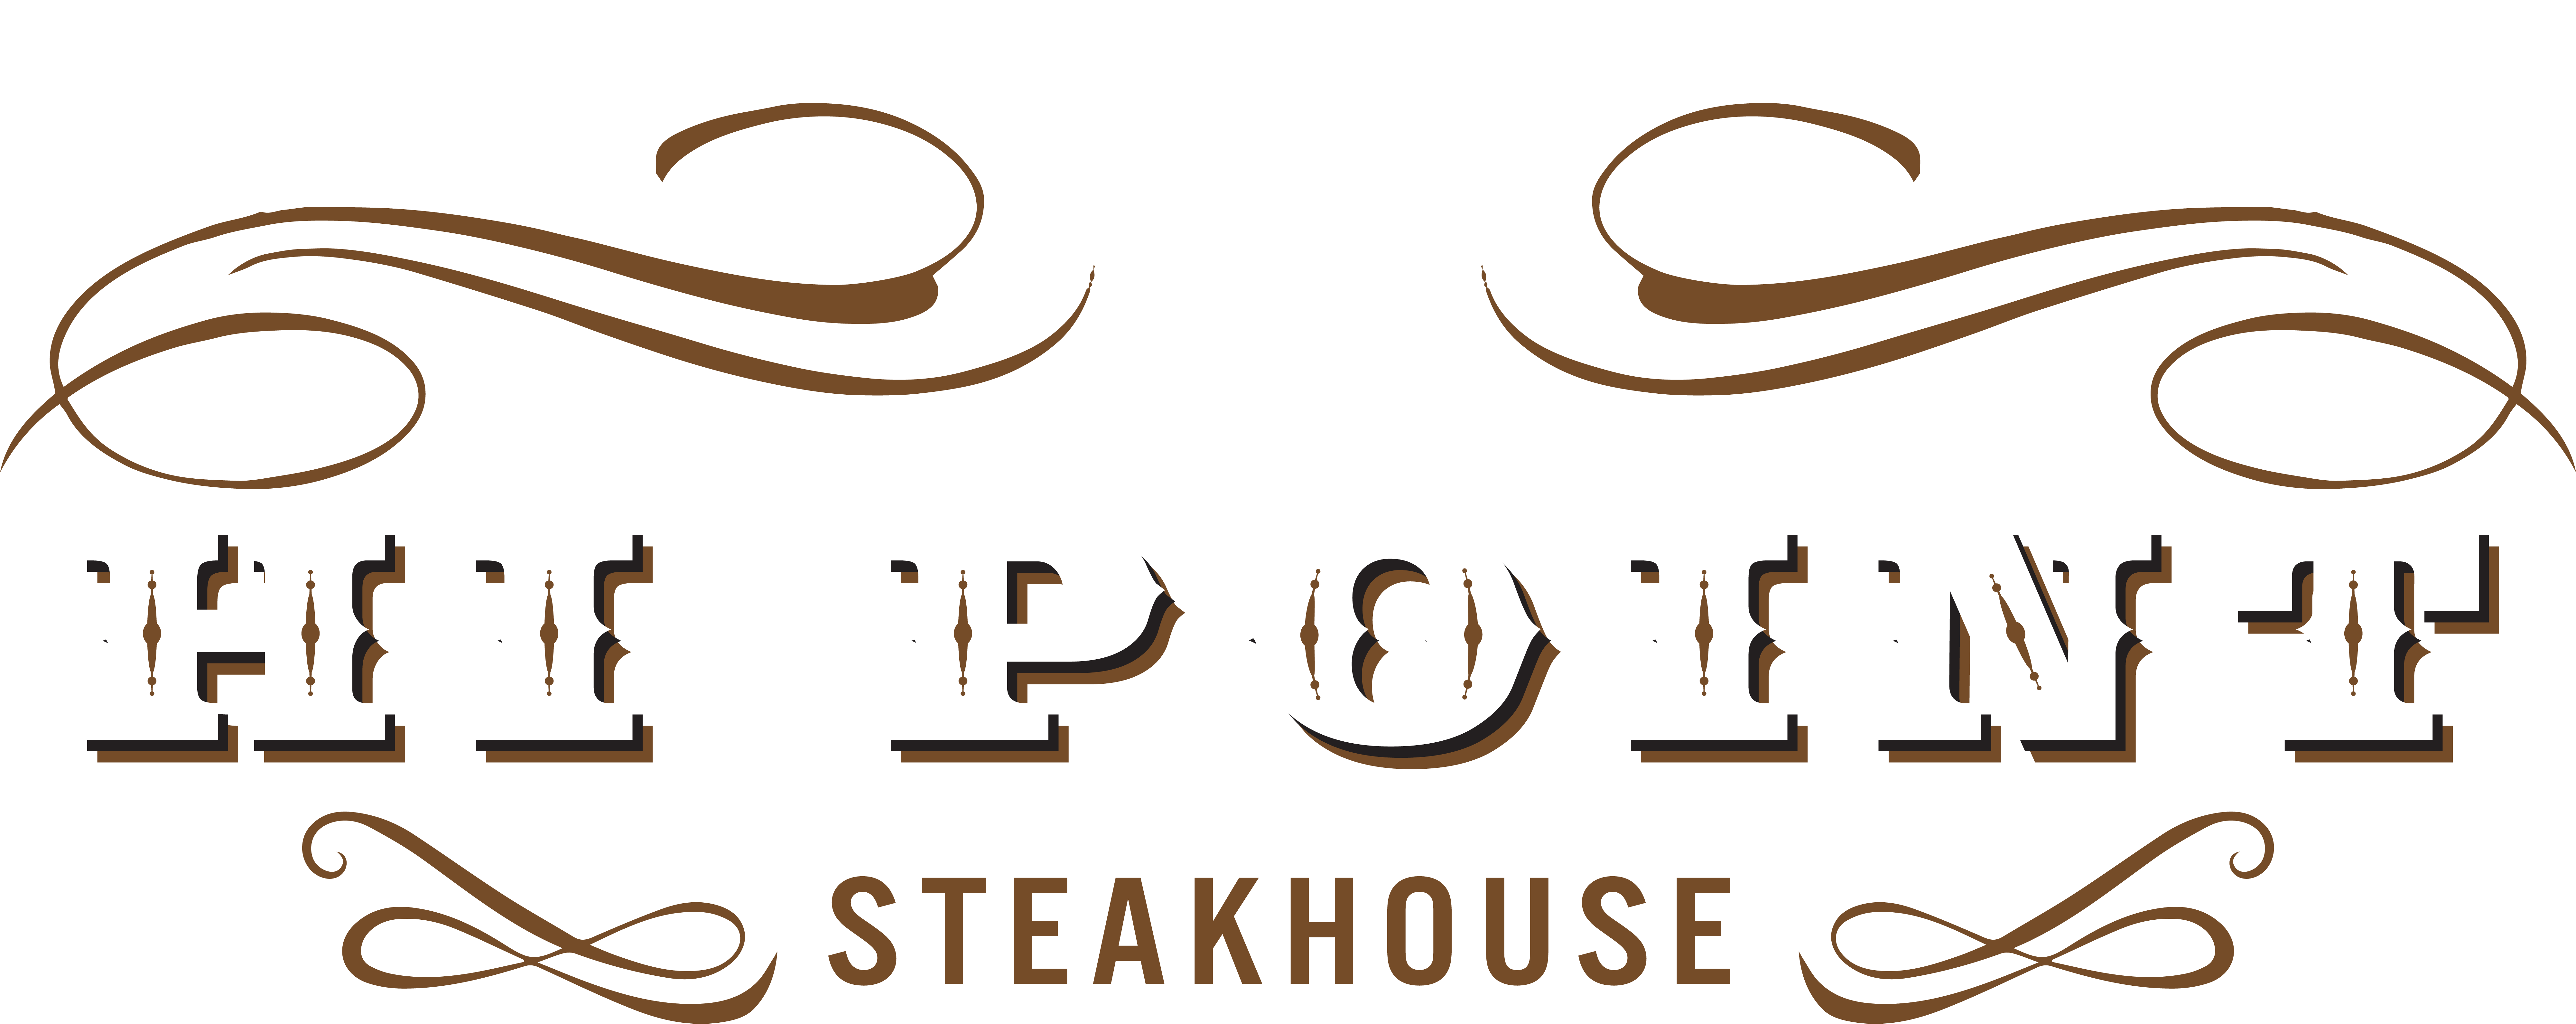 hi point steakhouse